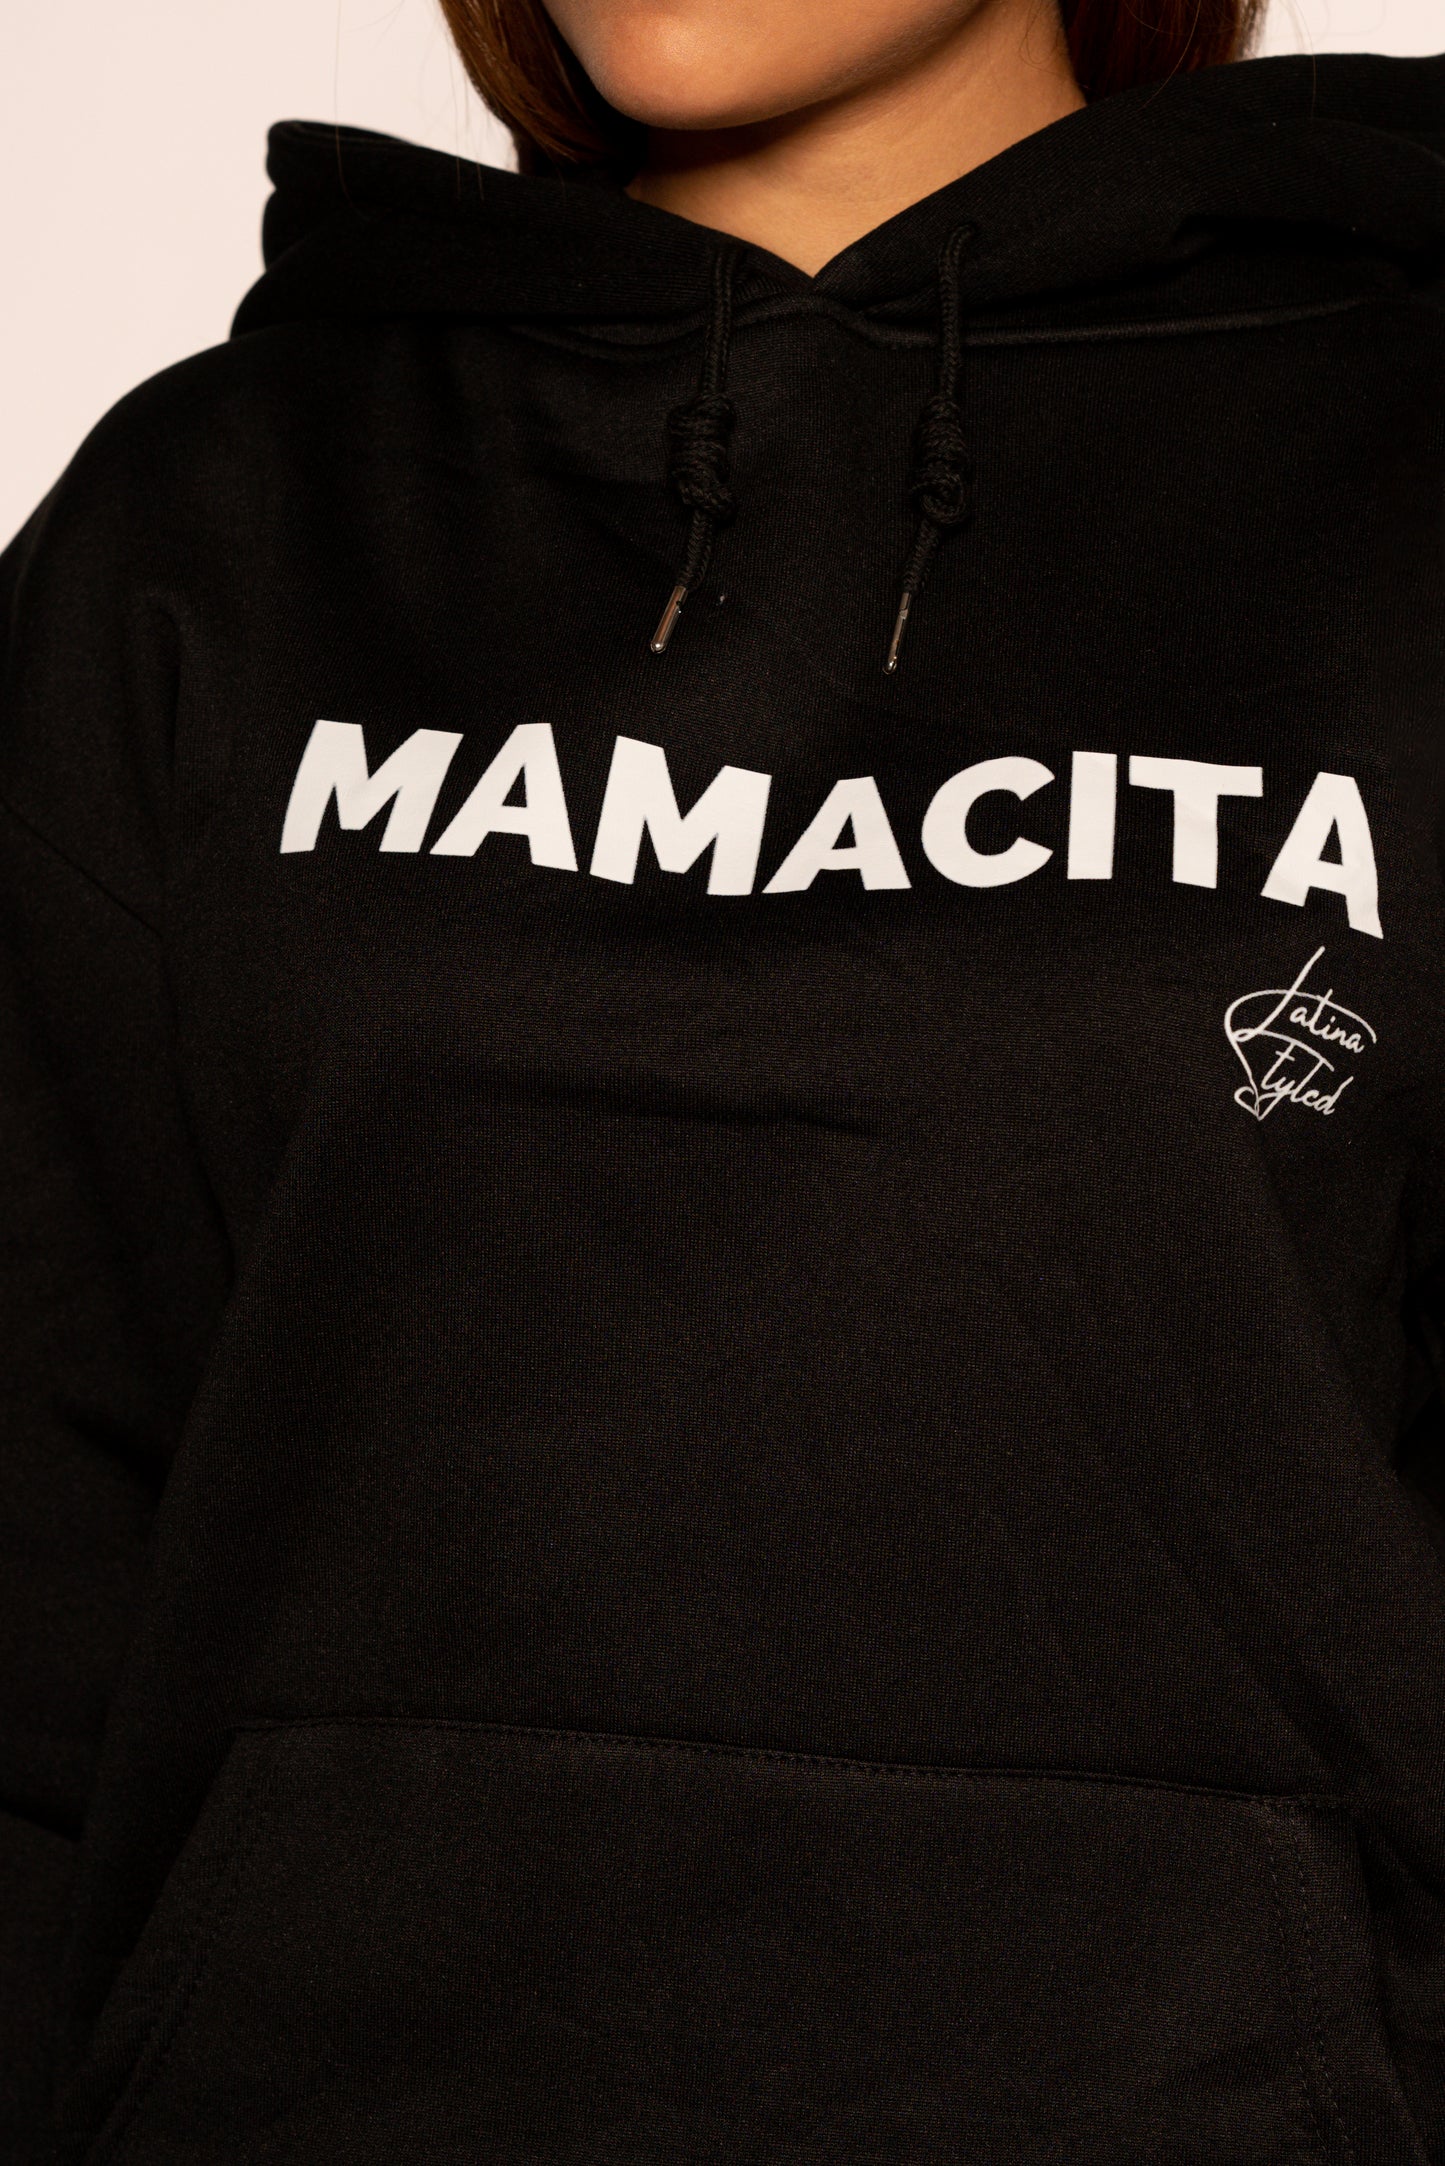 Mamacita Slogan Hoodie - Black